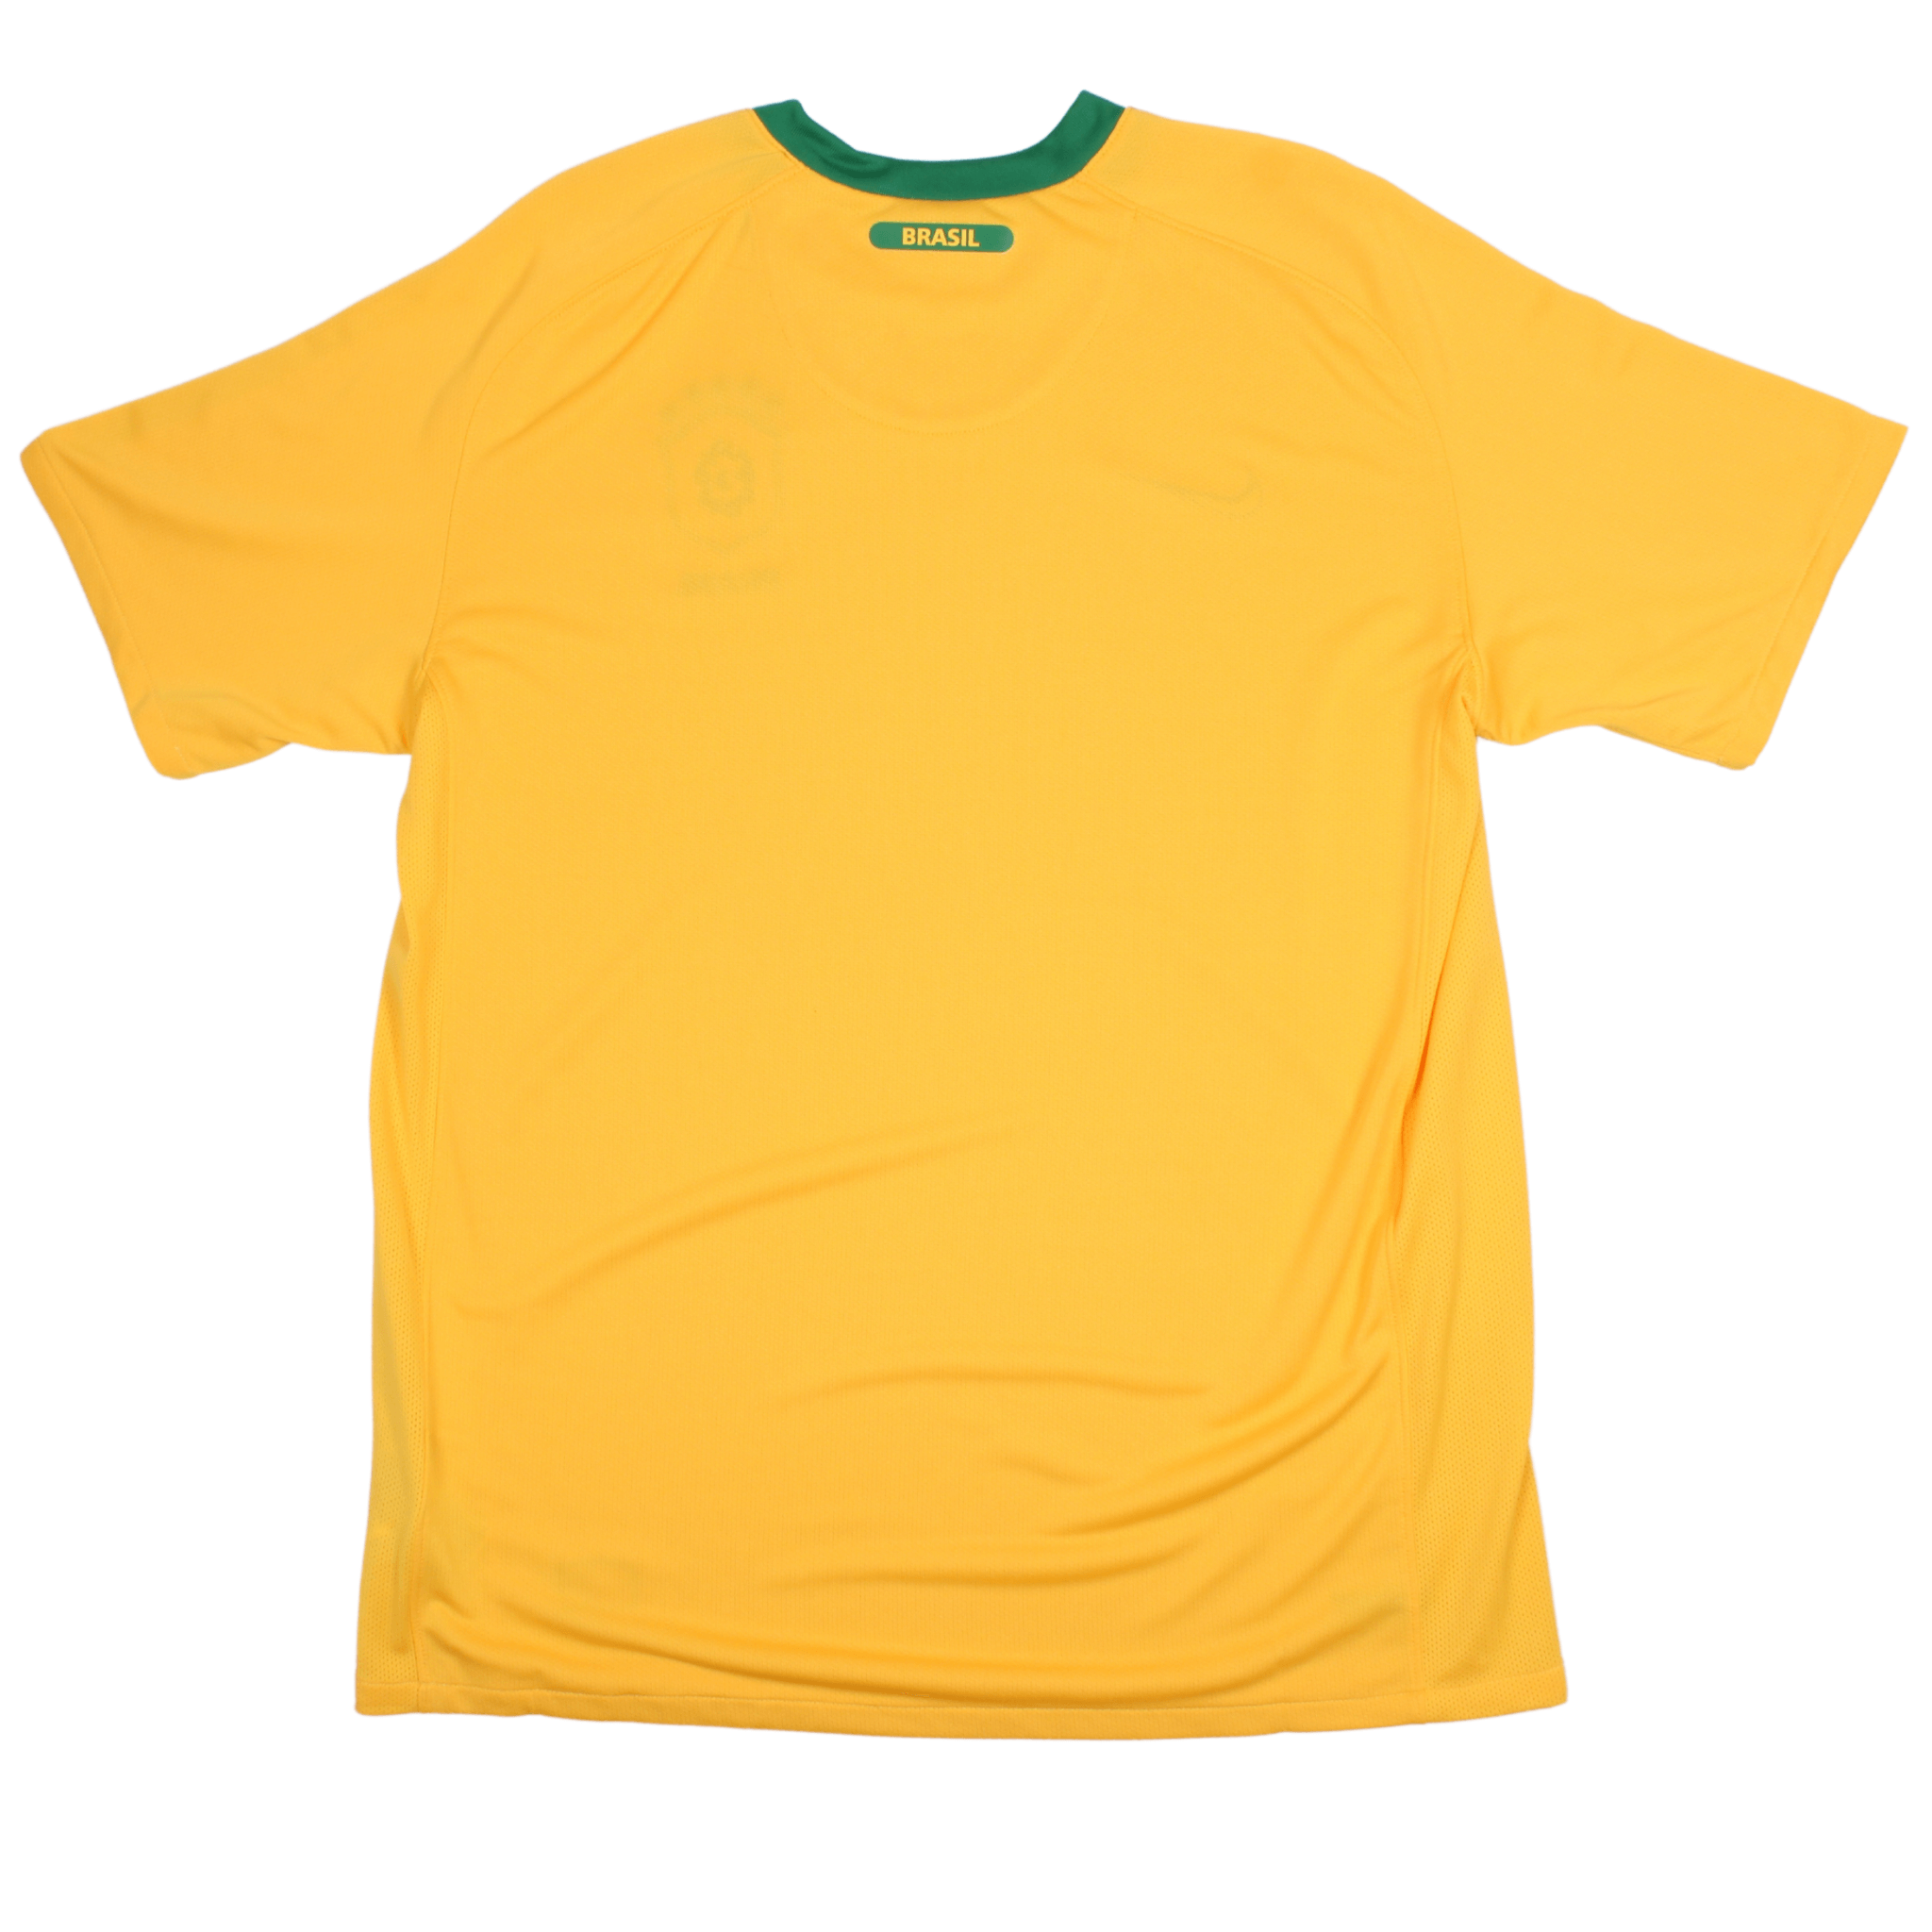 Nike Brazil FC Shirt (M) BNWT